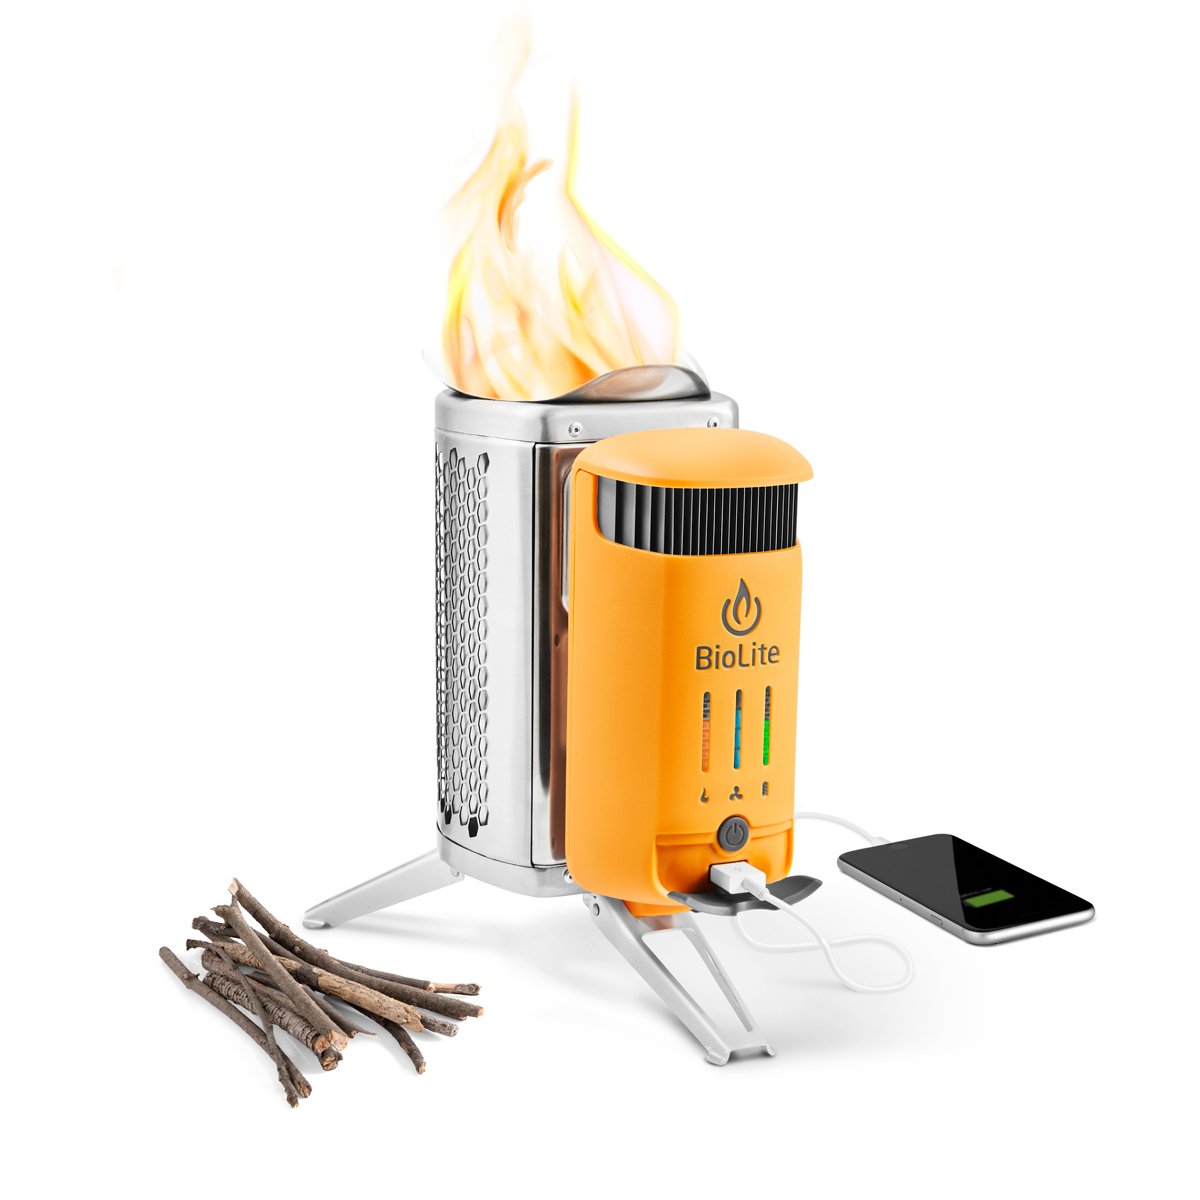 BioLite Campstove 2+ Wood Burning Electricity Generating & USB Charging Camp Stove - Amazon Prime - $112.46